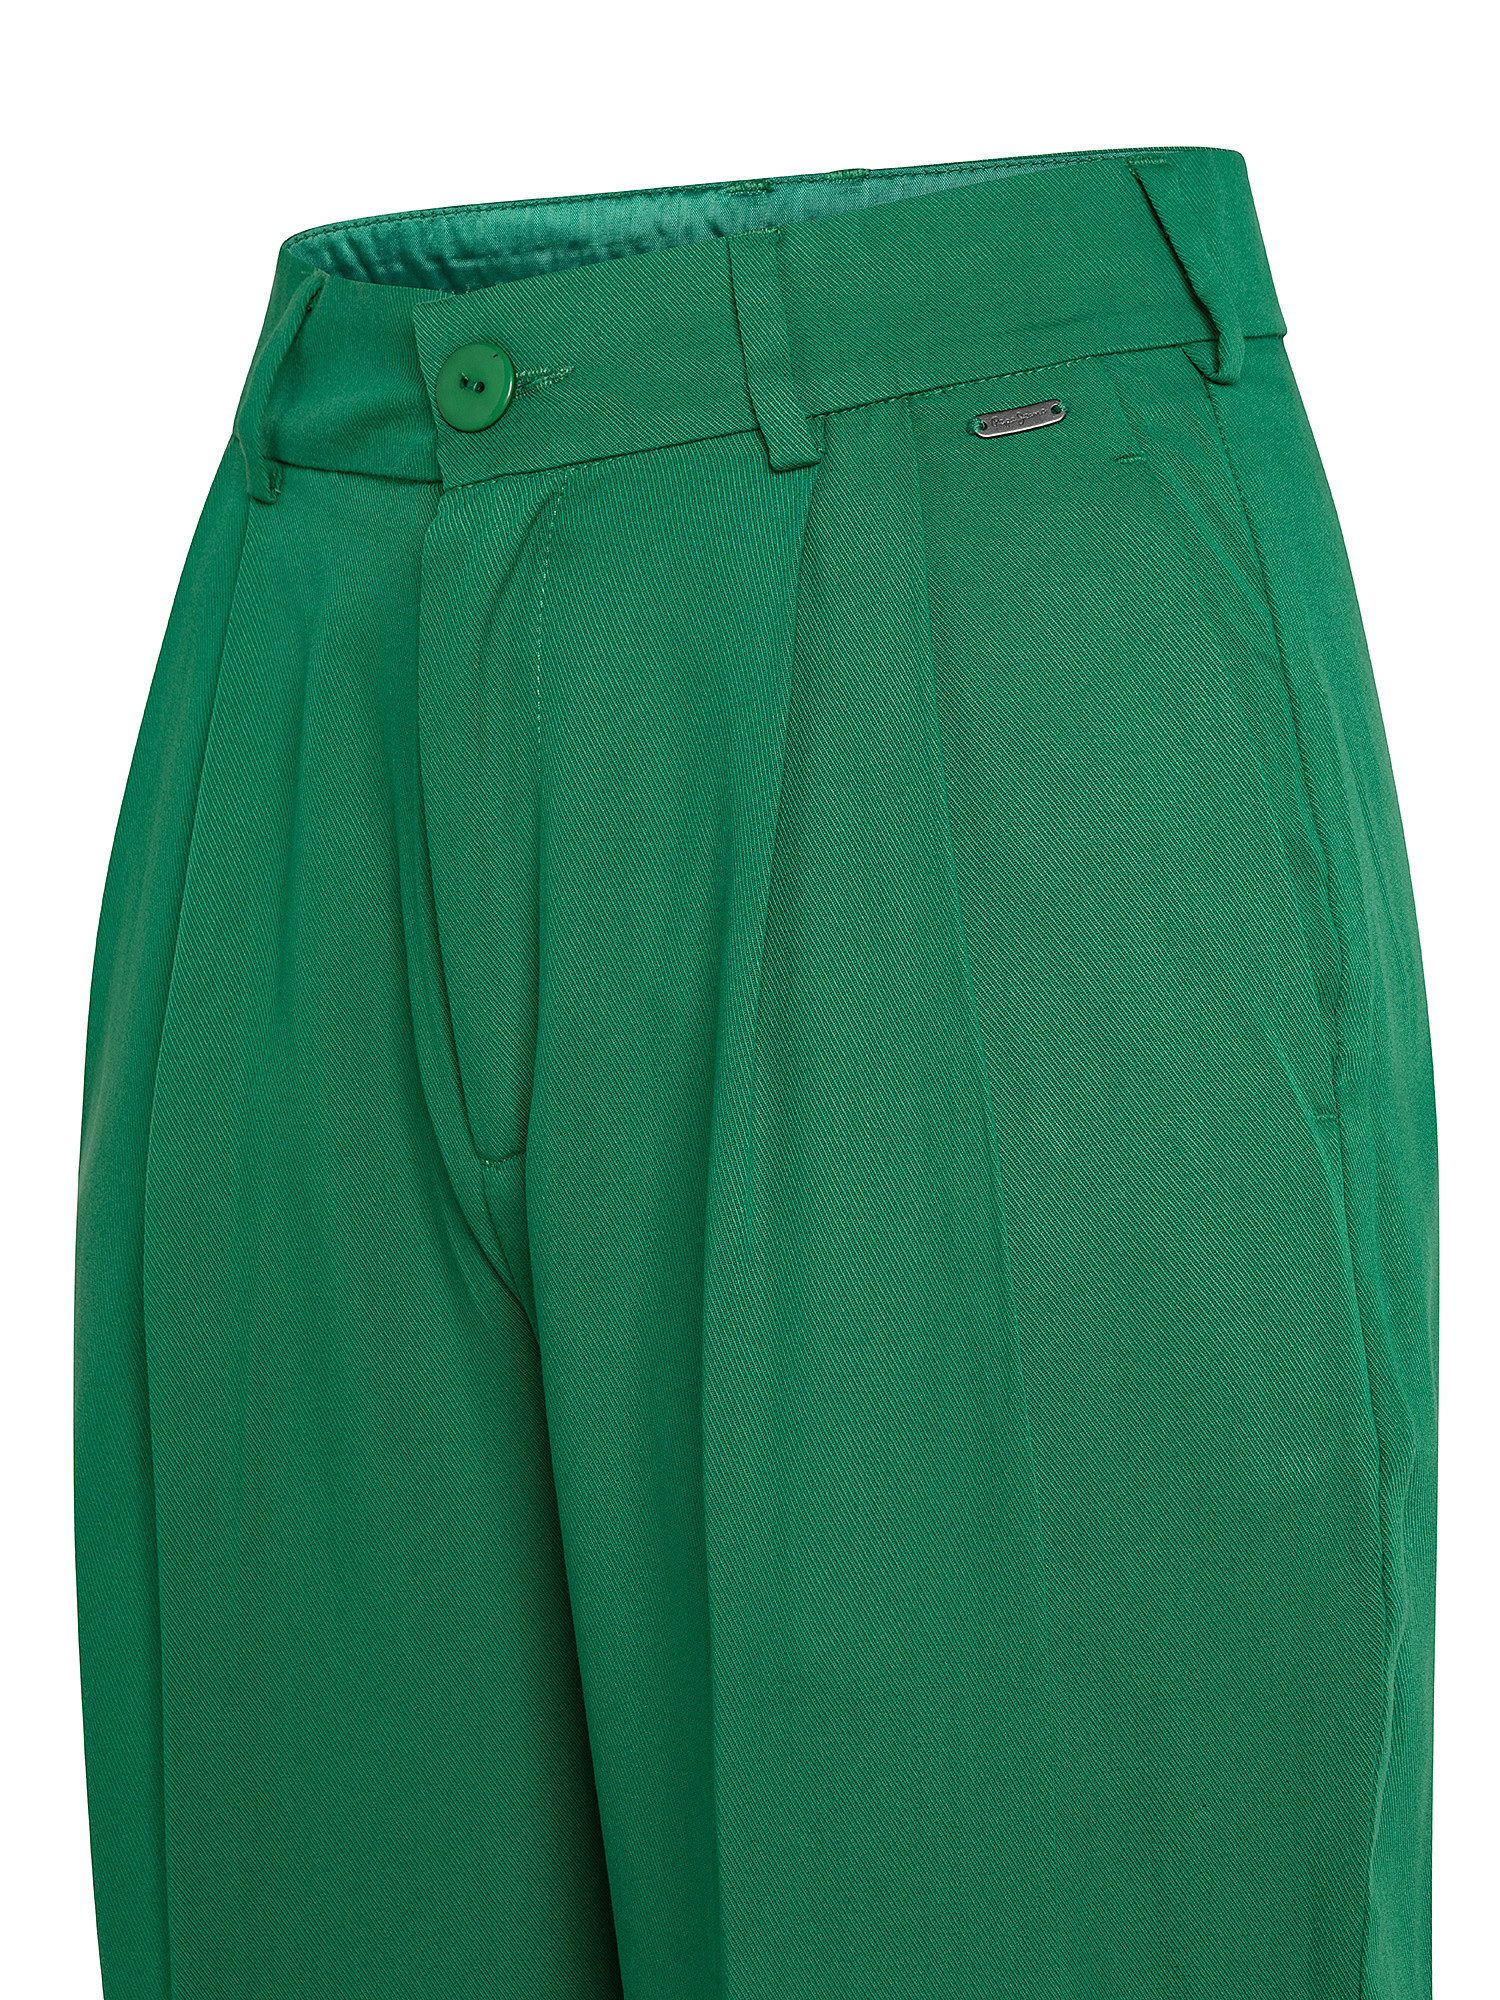 Fatima chino pants, Green, large image number 2